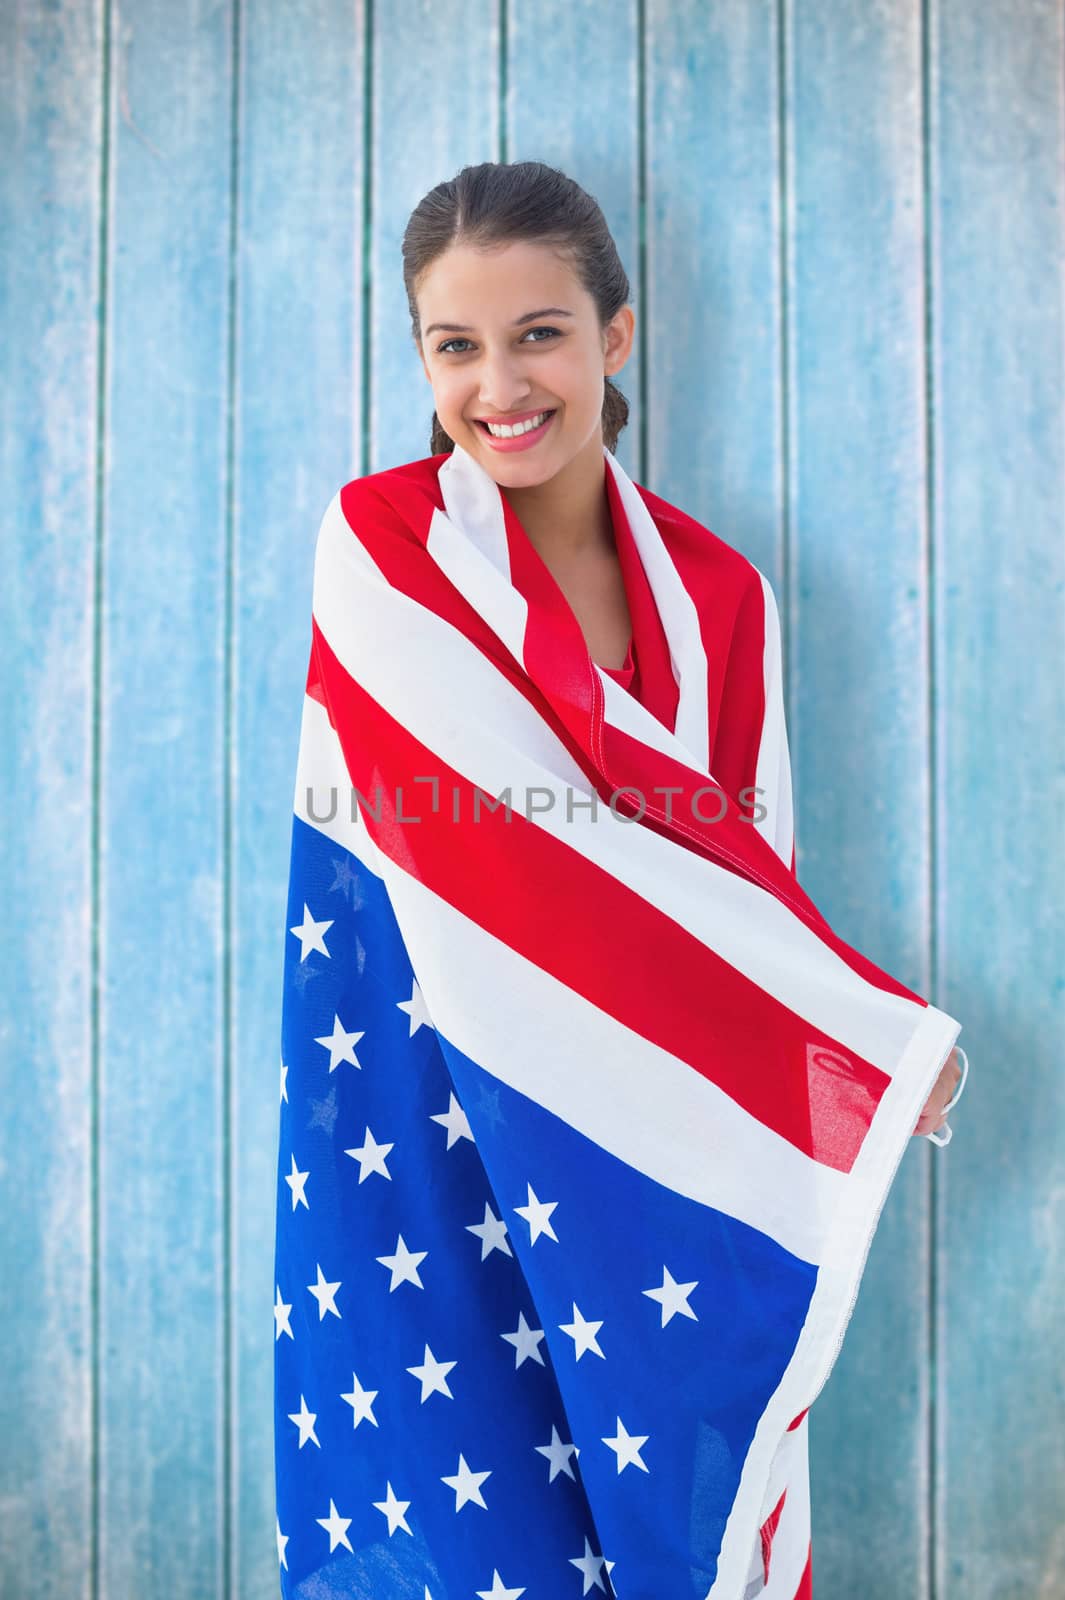 Pretty brunette wearing the american flag against wooden planks